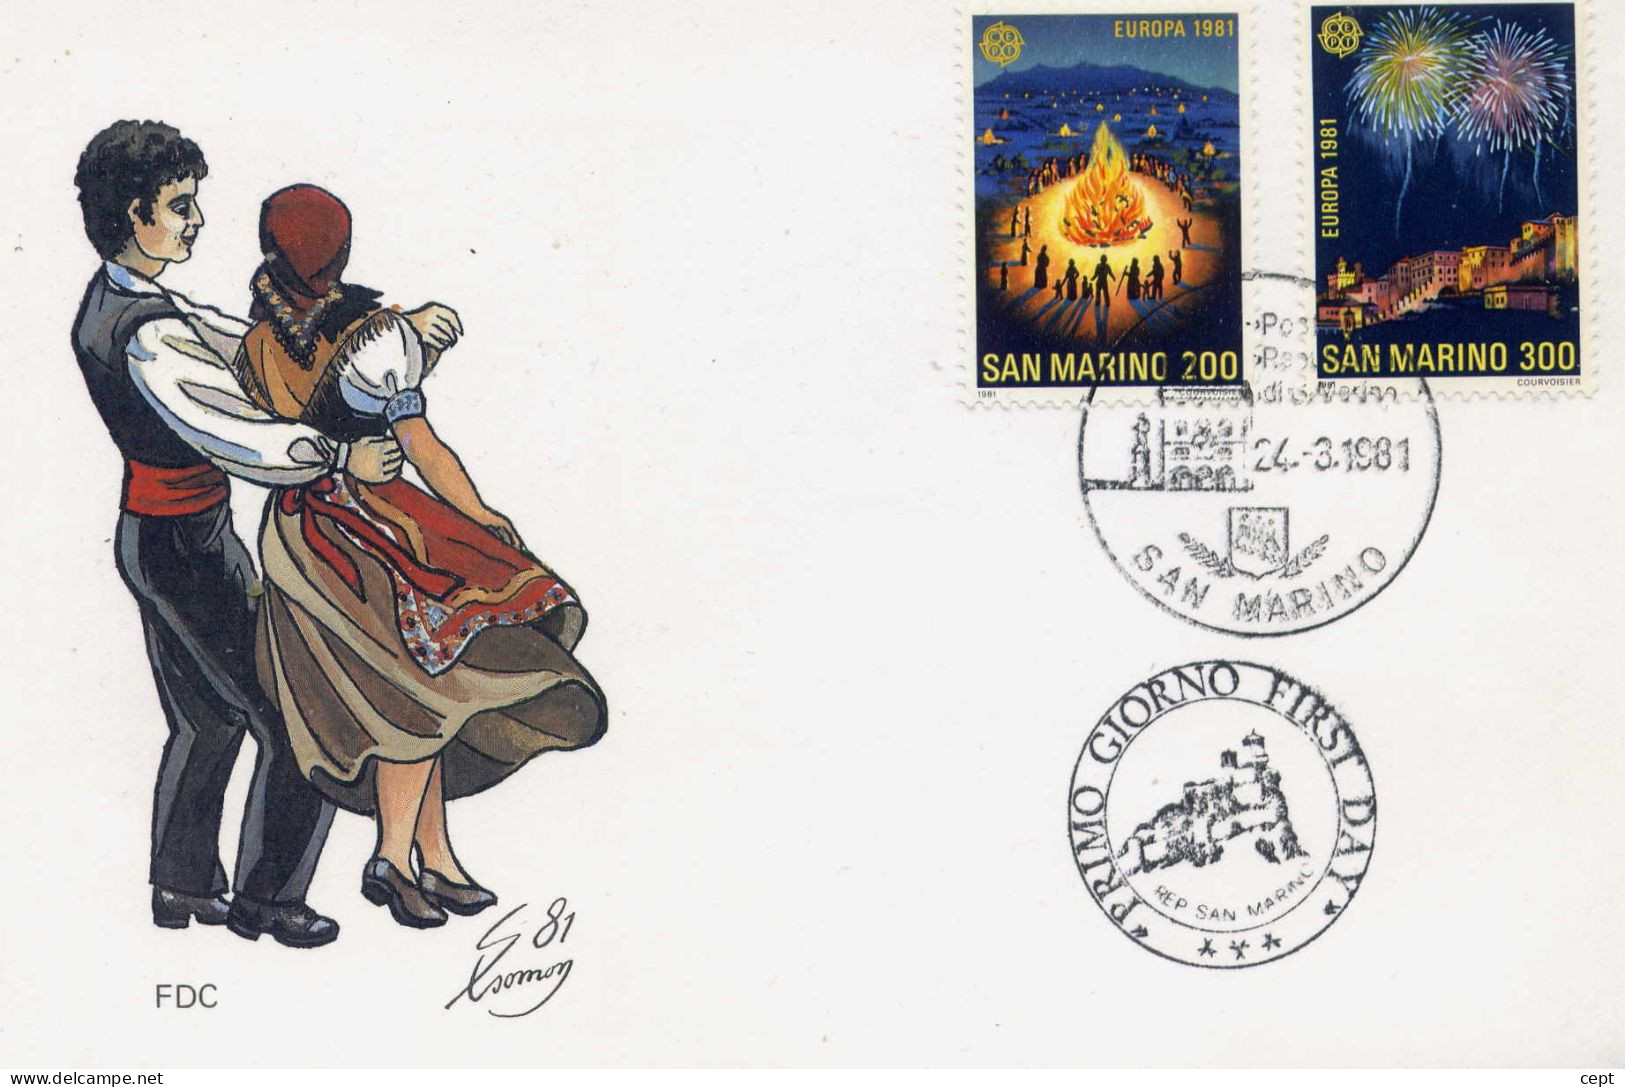 San Marino - Europa Cept 1981- FDC - 1981